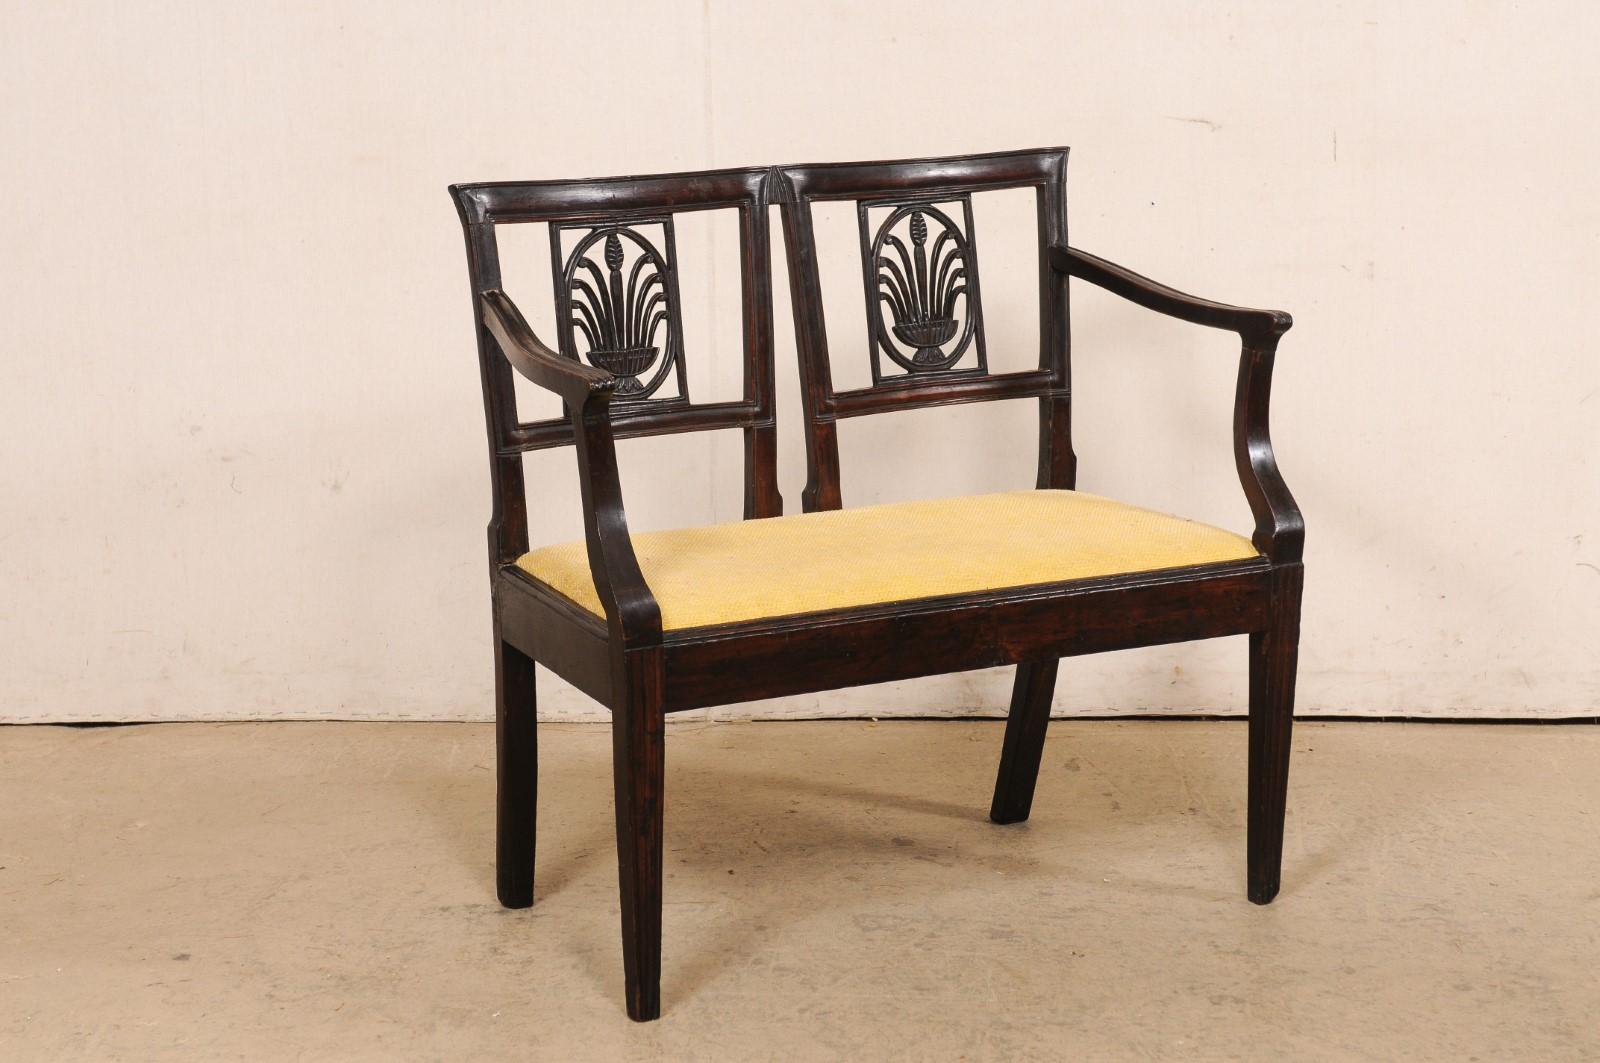 Italian Neoclassic Two-Seat Chair Settee, Late 18th C. In Good Condition For Sale In Atlanta, GA